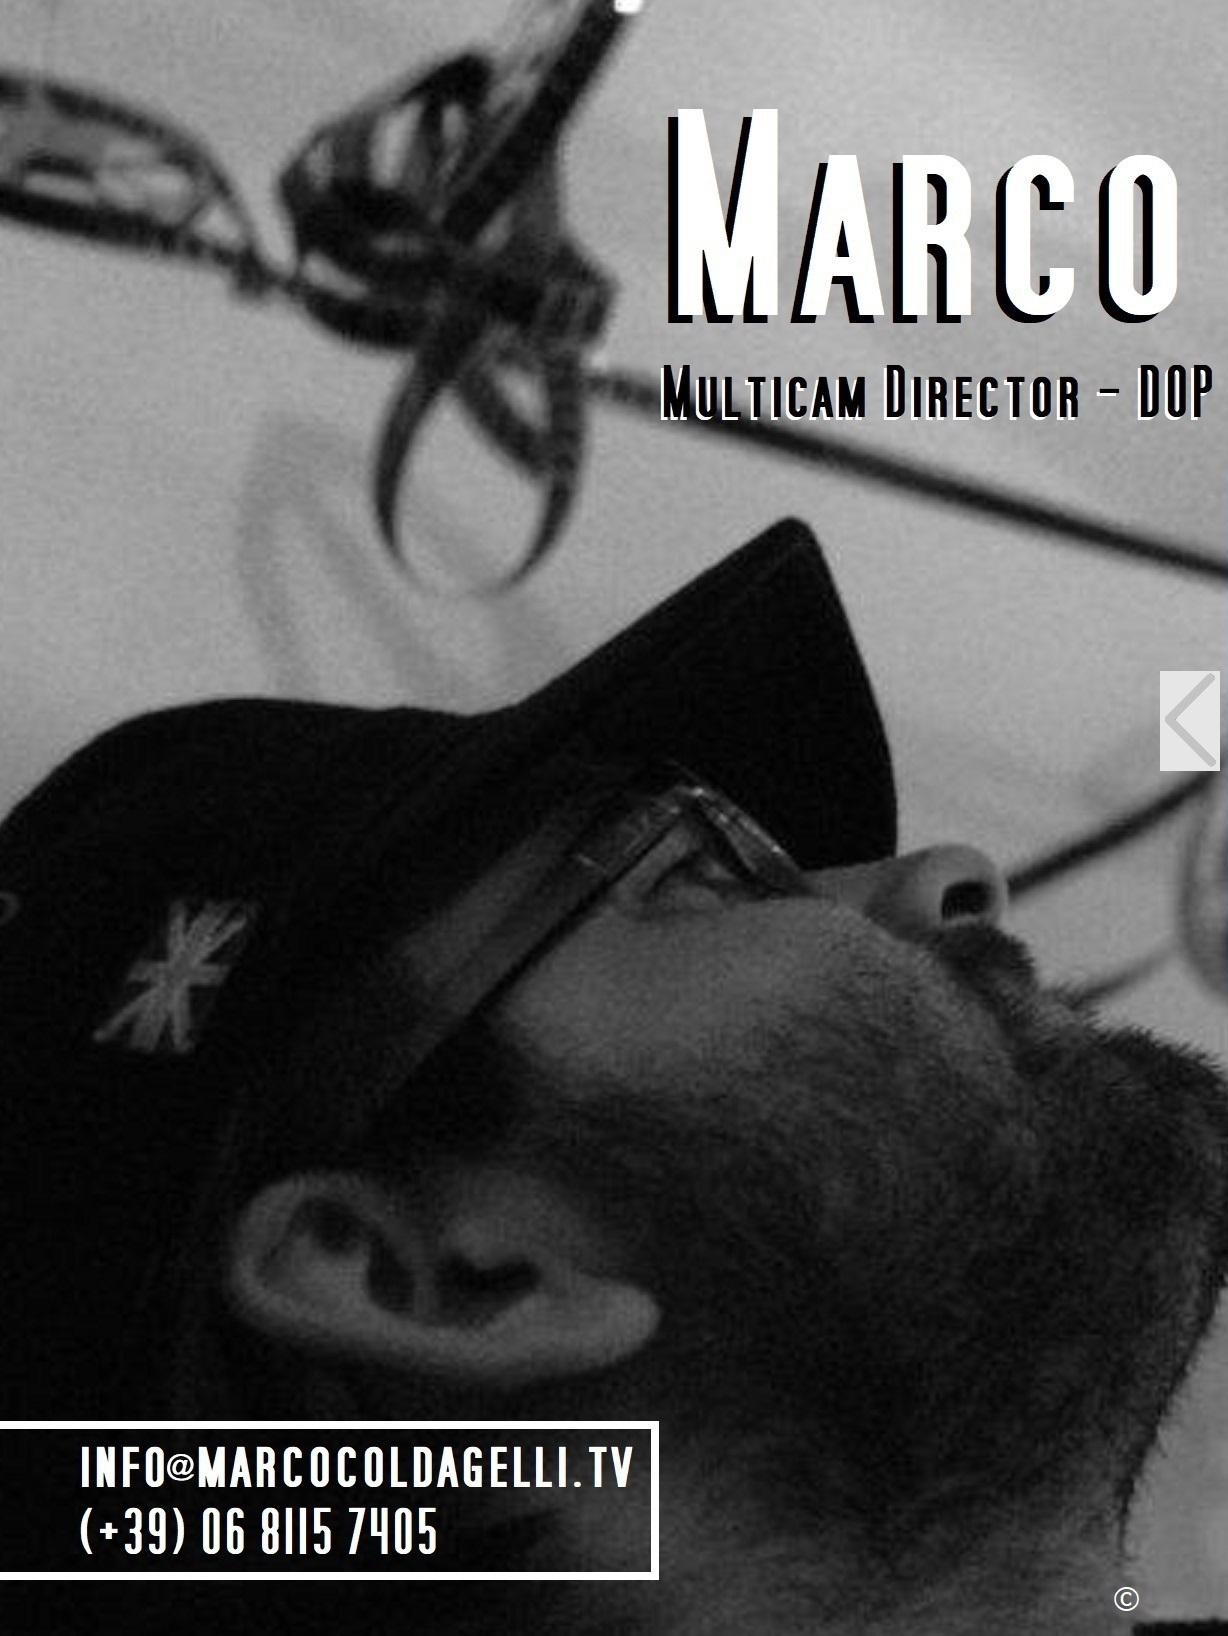 Marco Coldagelli - Multicam Director - DOP - Sound Designer - Producer - Composer - Main areas: Classical Music - Live Concerts - Event Cinema - Soundtracks - info@marcocoldagelli.tv - (+39) 06 8115 7405 - (Copyright) all rights reserved